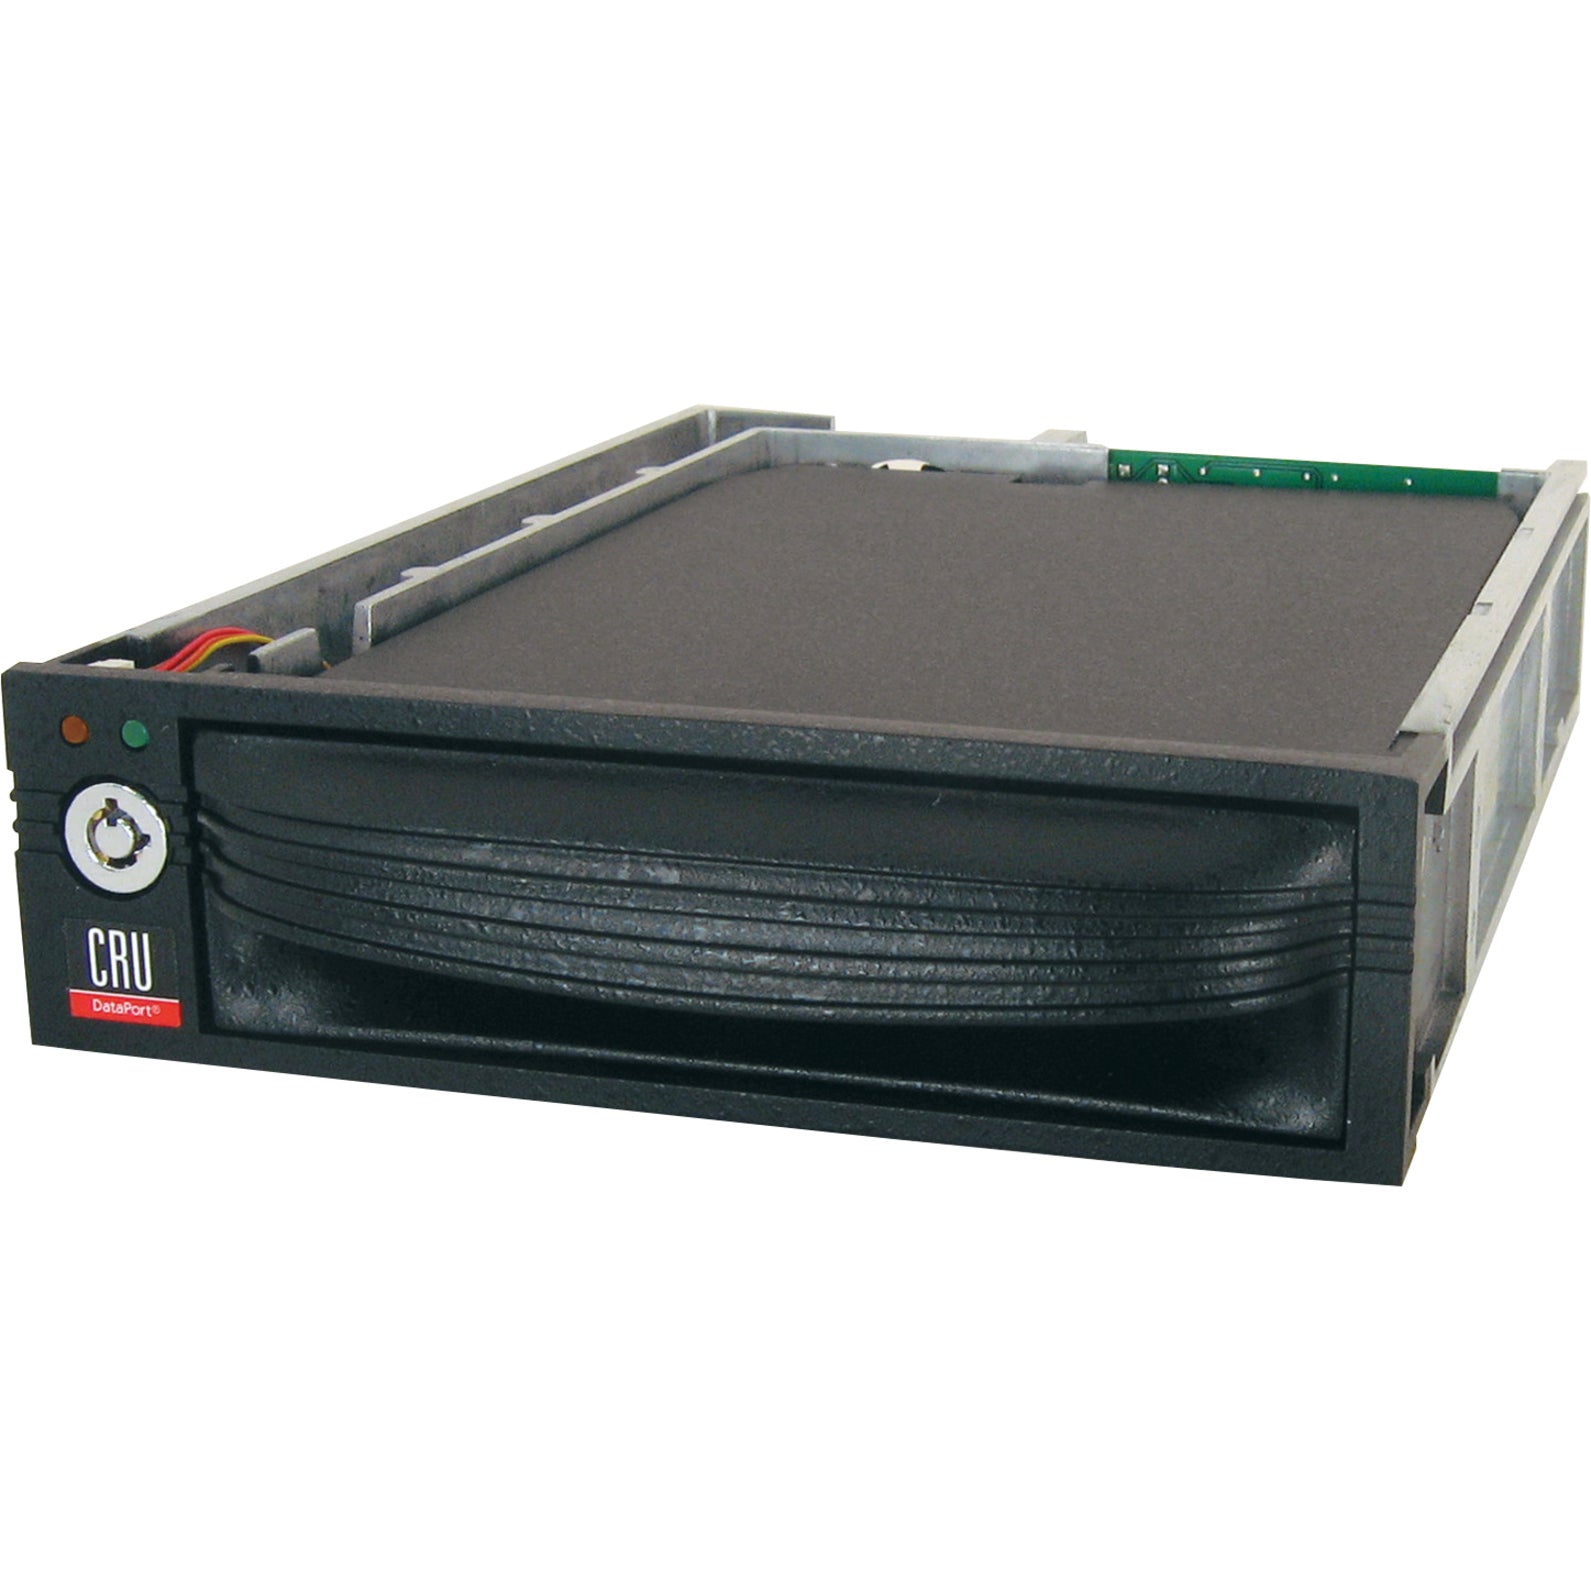 CRU 8440-6502-0500 DataPort 10 Drive Bay Adapter Internal - Black, 5 Year Warranty, RoHS Certified